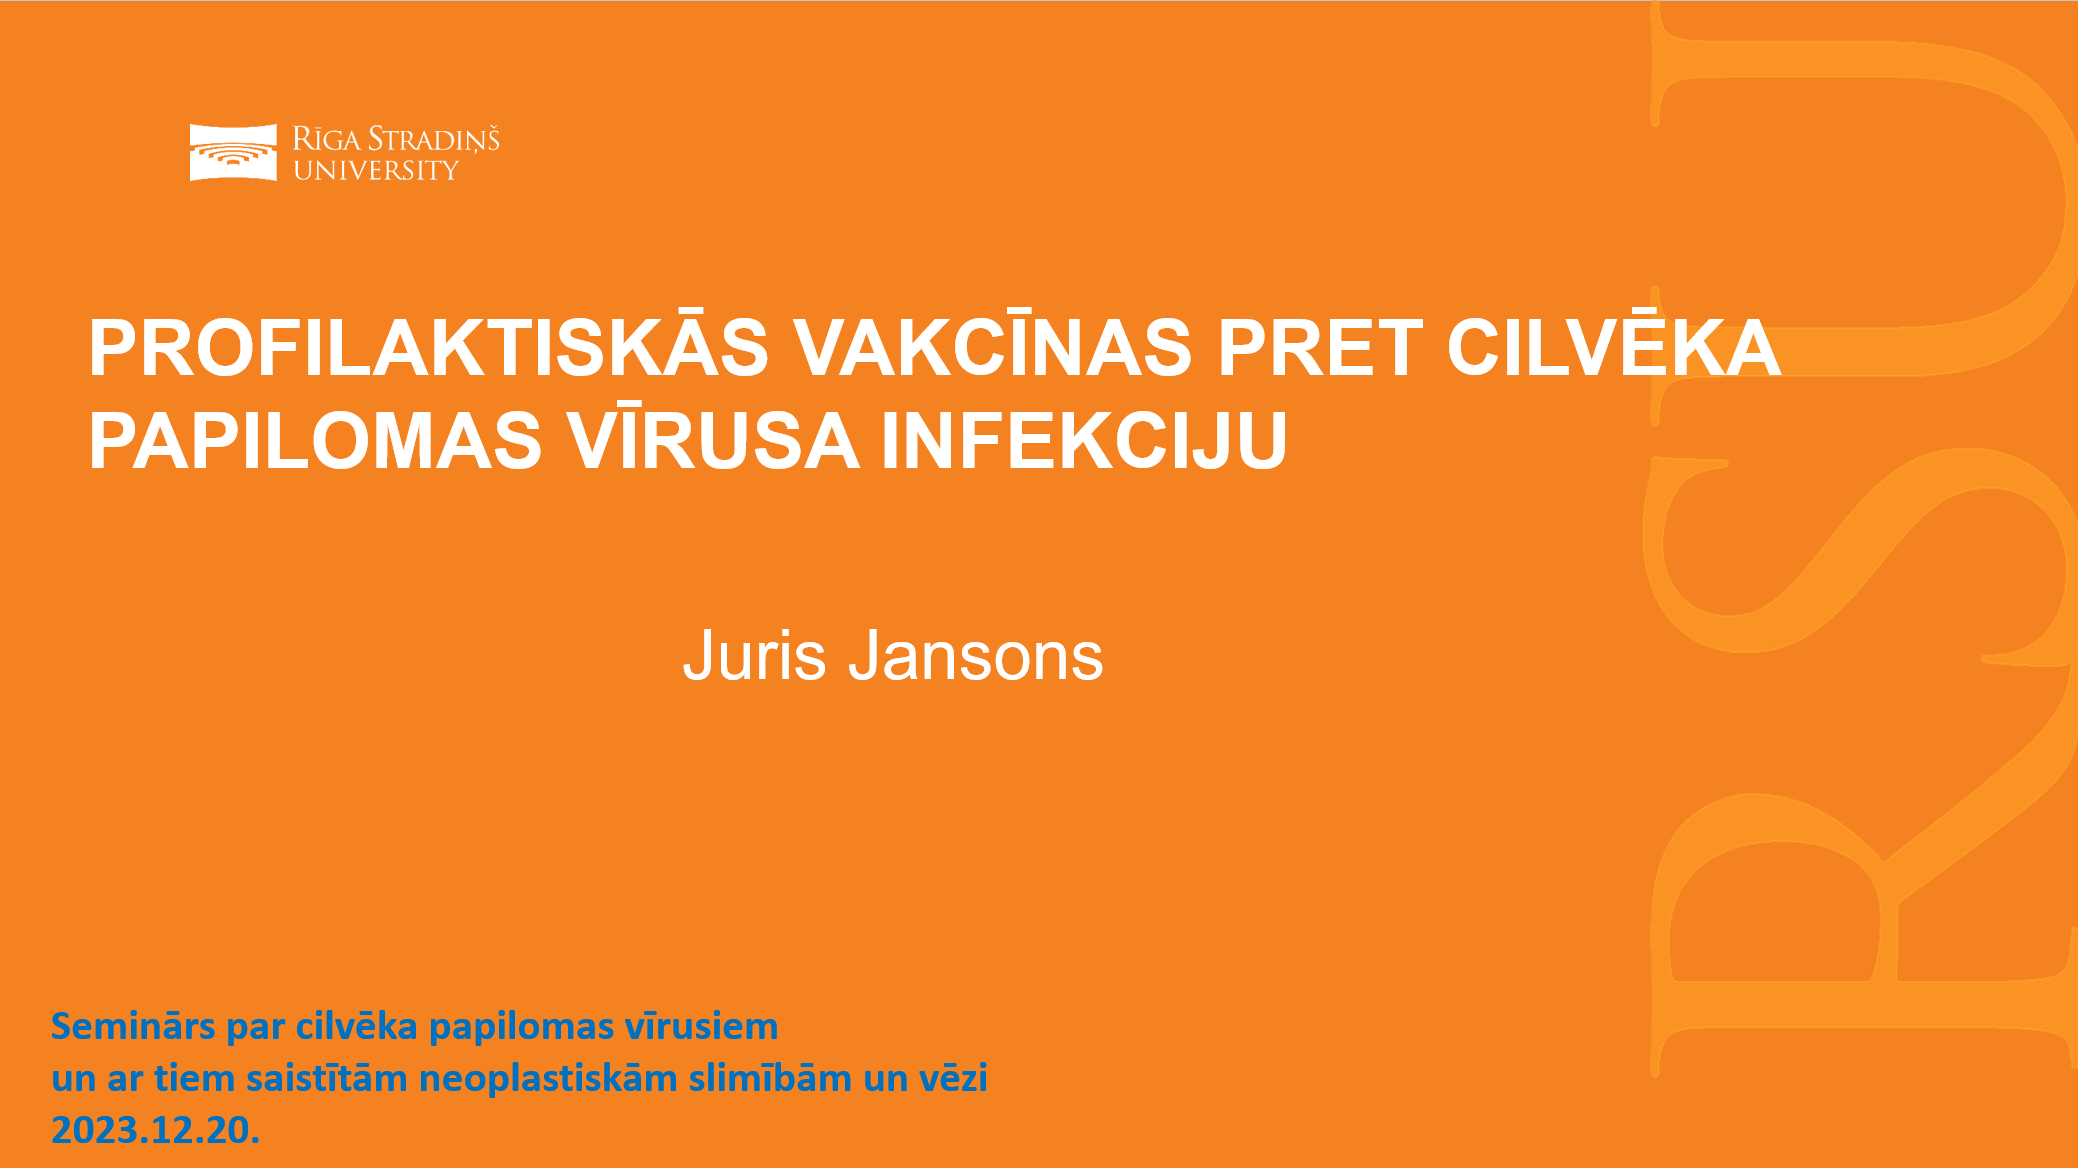 Juris Jansons pp presentation